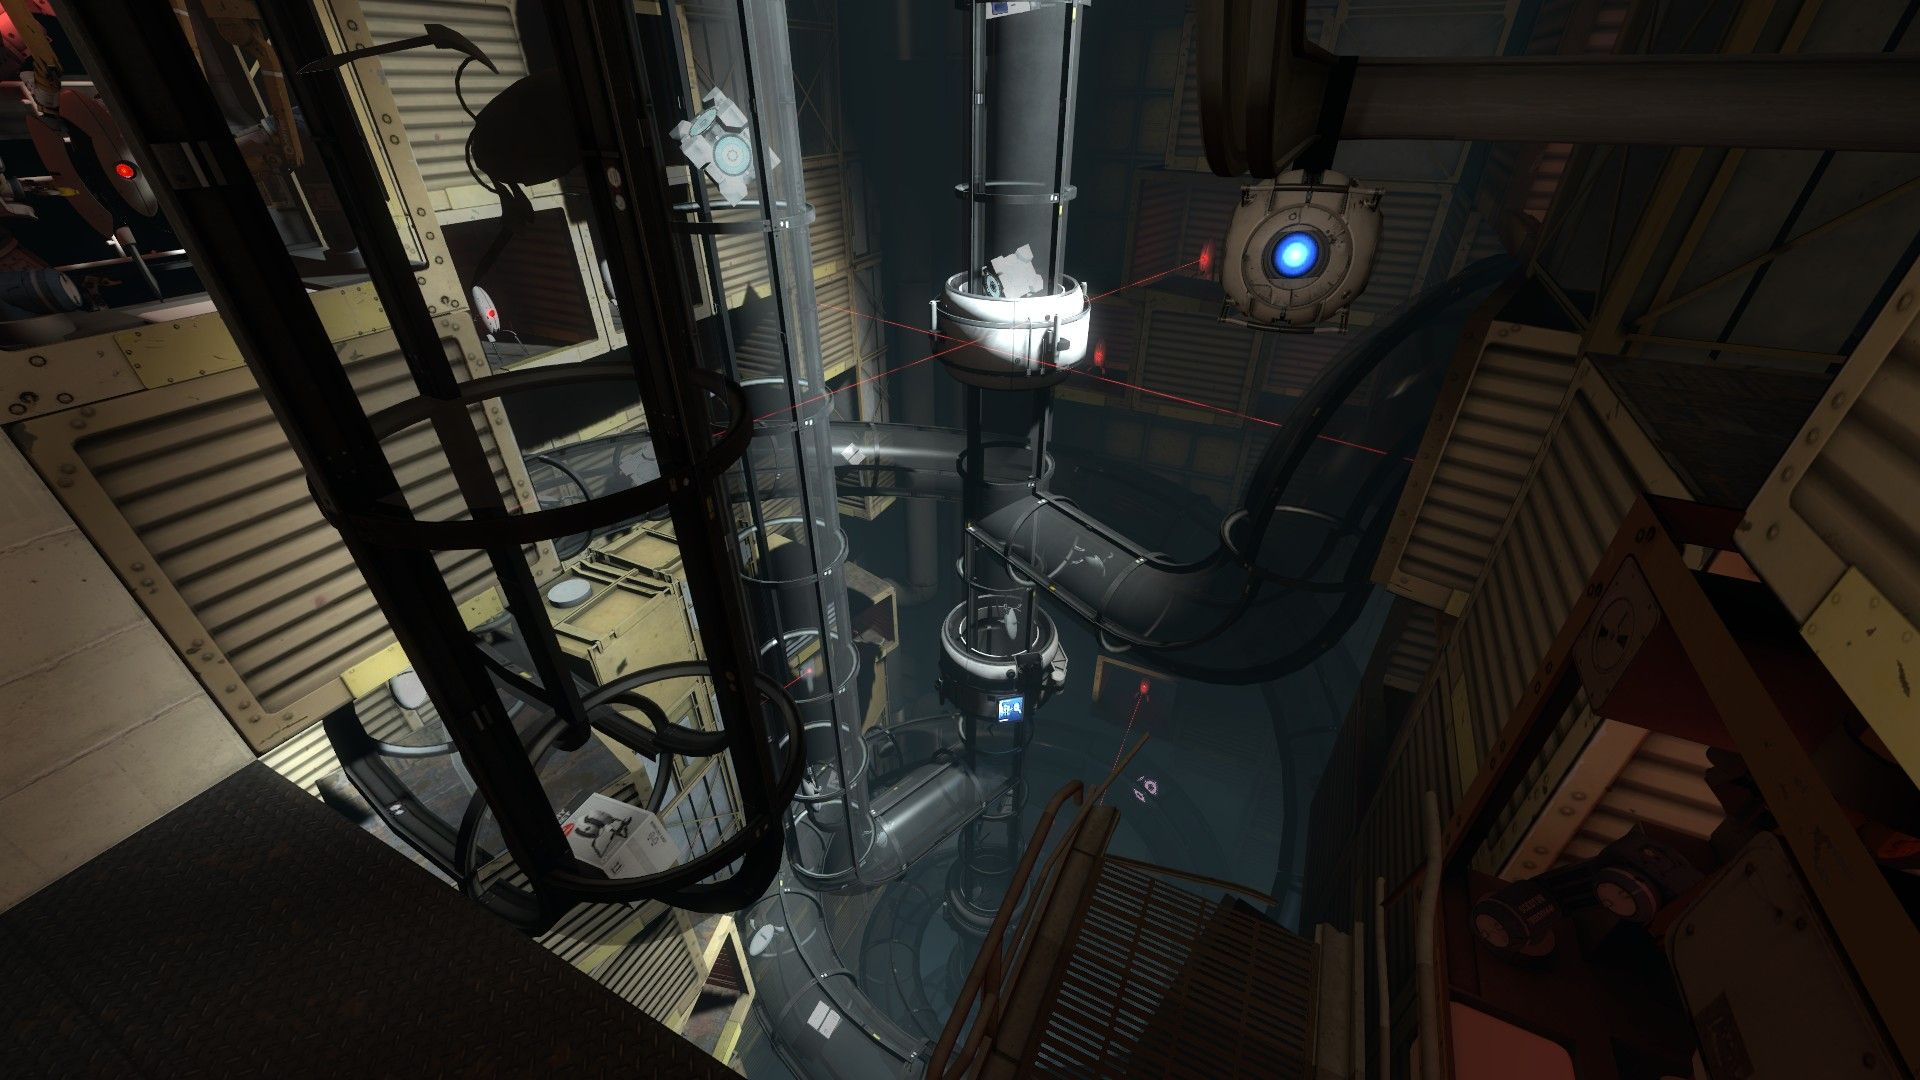 Portal 2 on Steam